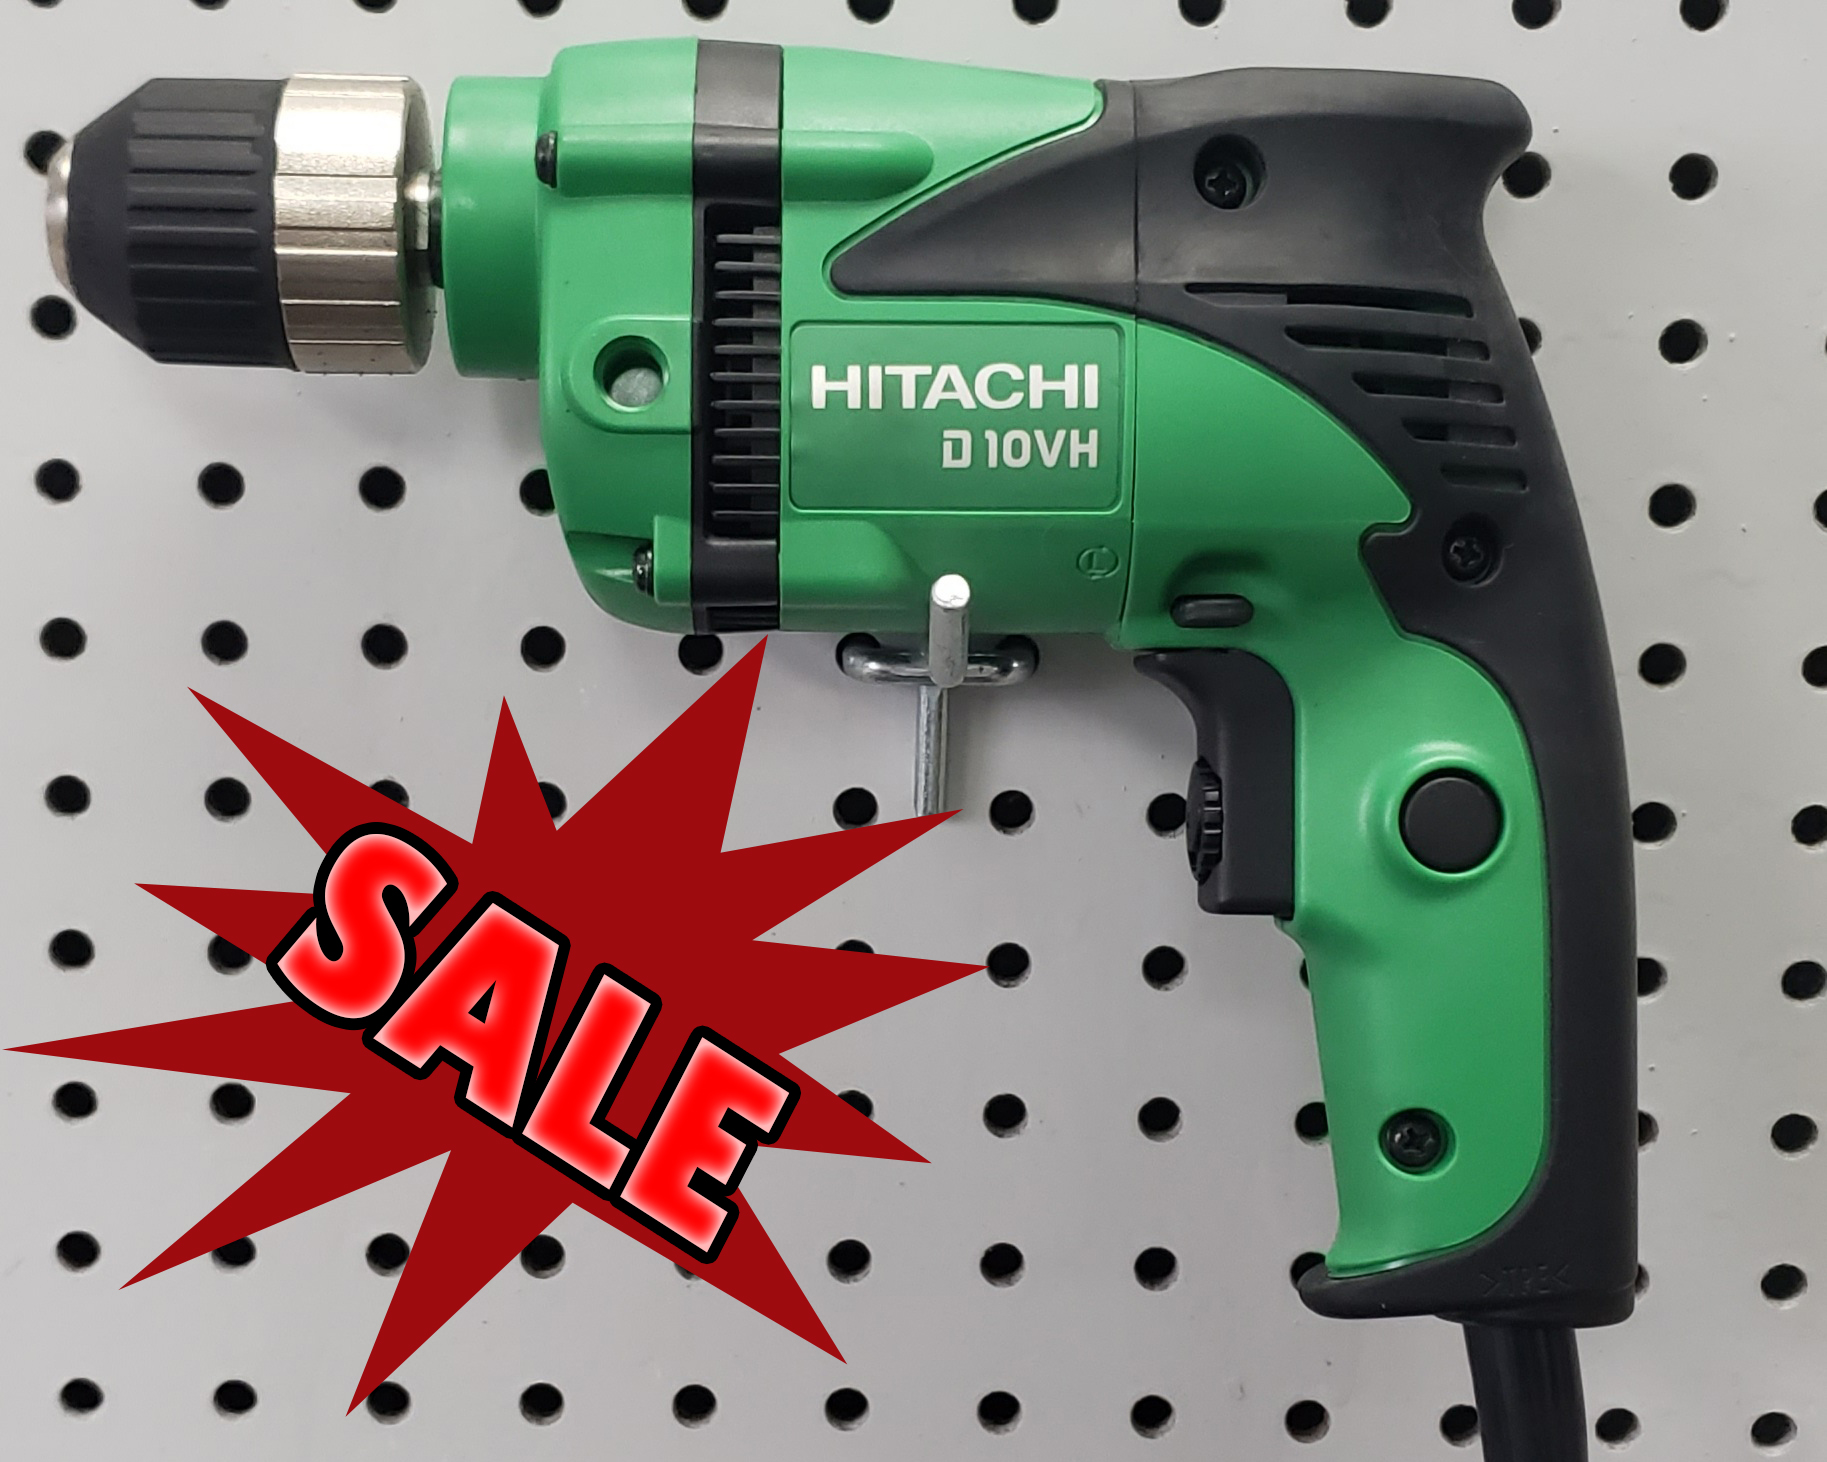 SALE !! Hitachi Power Tools Drill Keyless 3/8' 6.0Amp D10VH